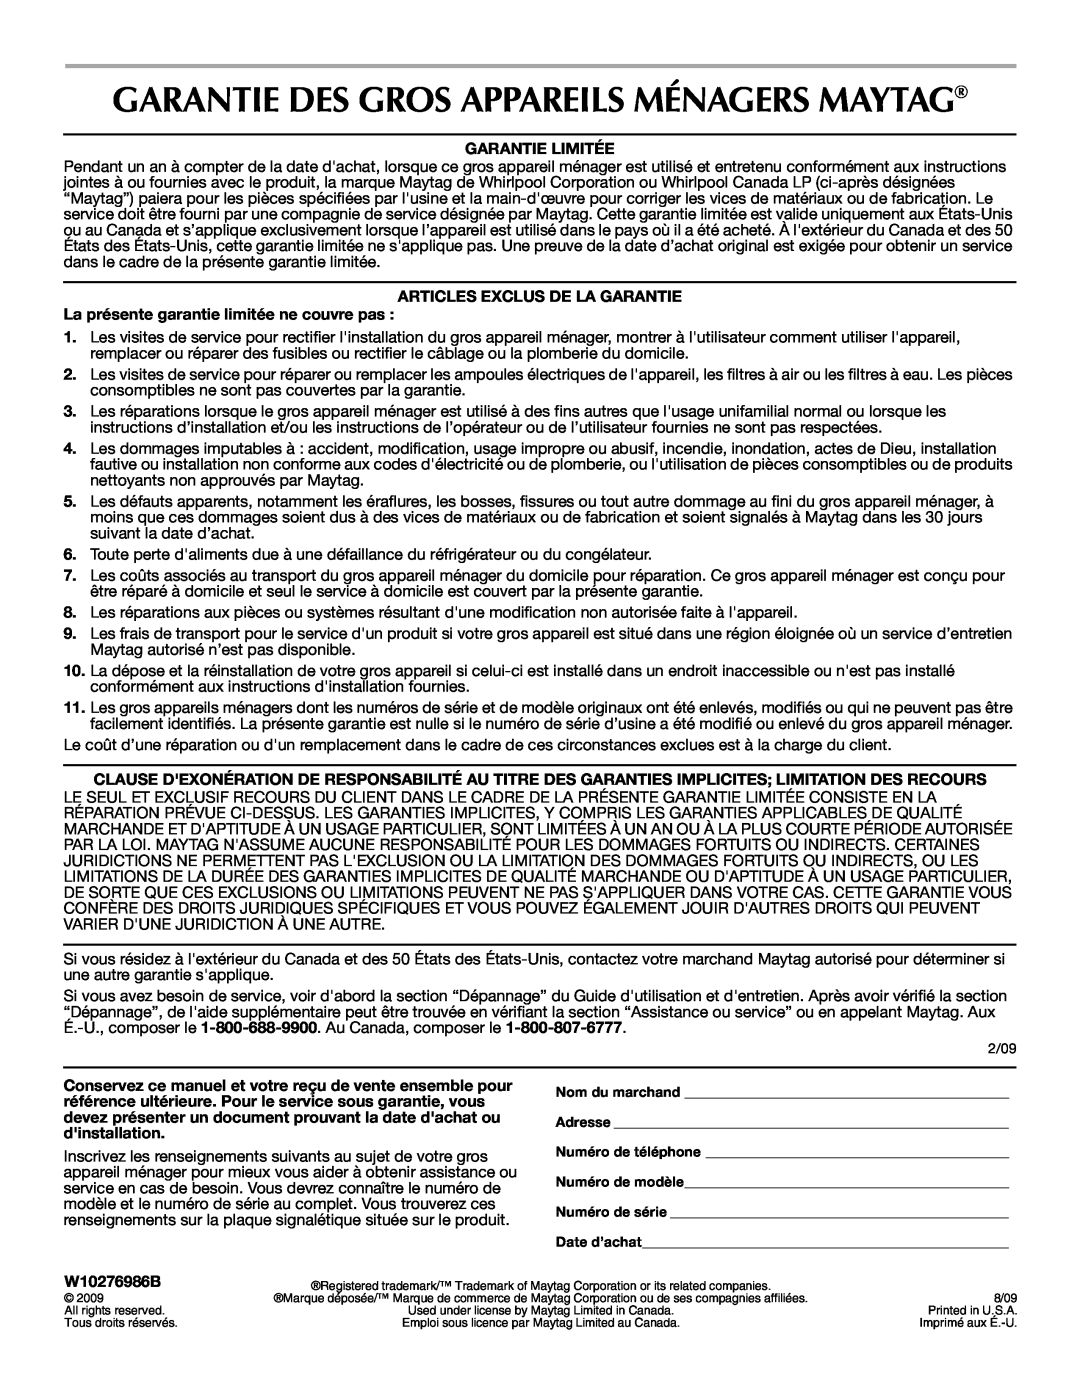 Maytag W10276986B manual Garantie Des Gros Appareils Ménagers Maytag, Garantie Limitée, Articles Exclus De La Garantie 